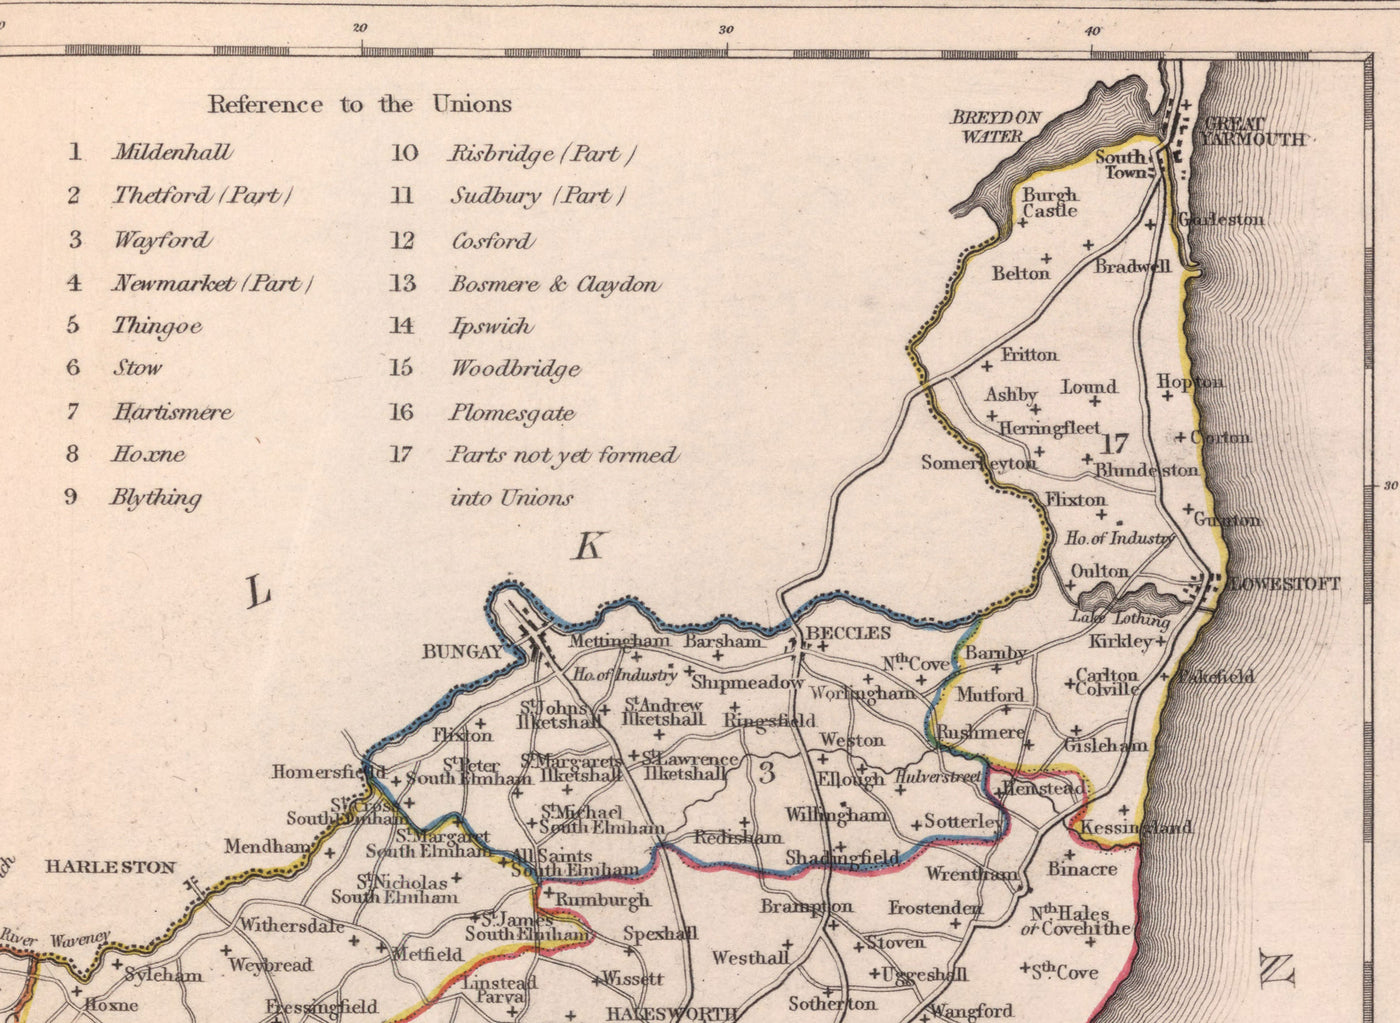 Antiguo mapa de Suffolk en 1844 por Samuel Lewis - Ipswich, Woodbridge, Bury St. Edmunds, Thetford, Great Yarmouth